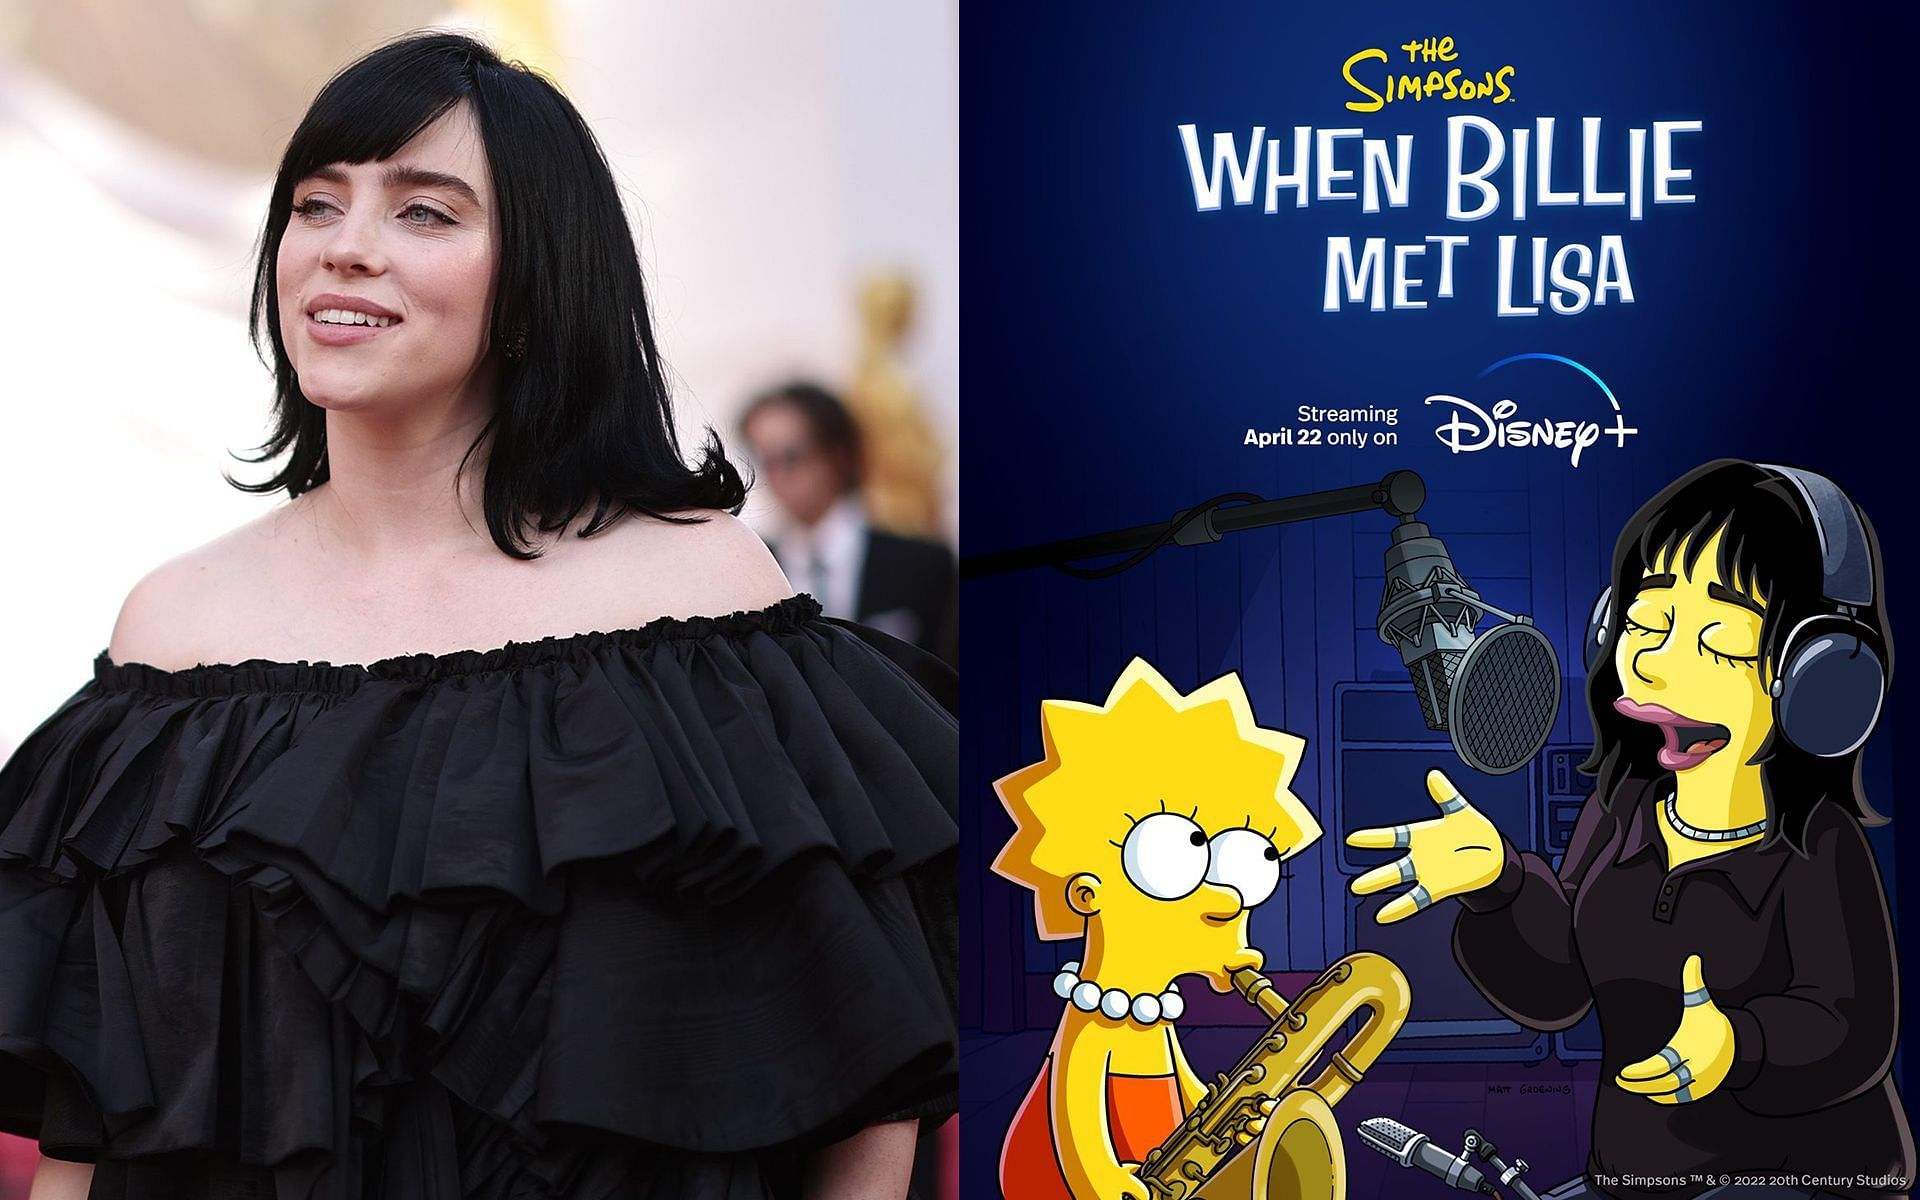 Disney+ will broadcast When Billie Met Lisa on April 22, 2022 (Image via Getty Images &amp; Twitter/@billieeilish)